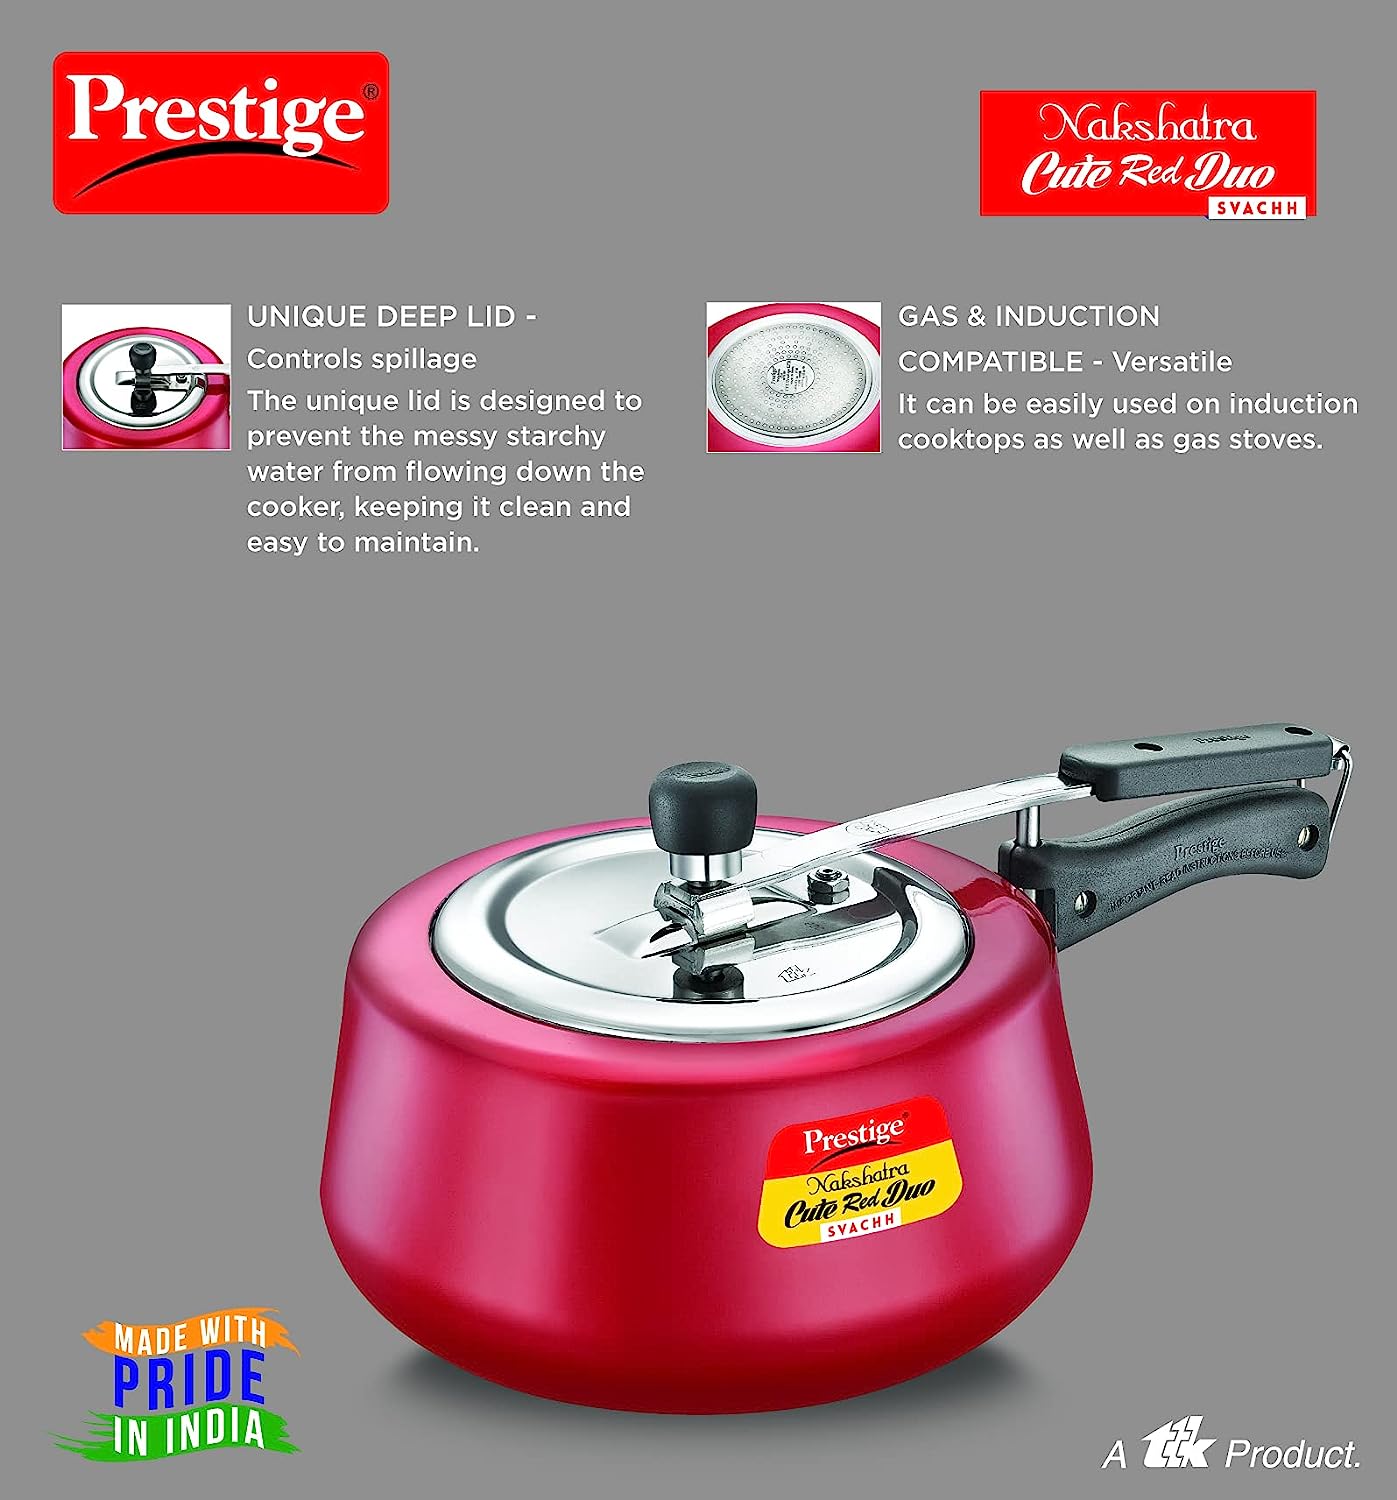 Prestige Nakshatra Cute Duo Svachh Aluminium Inner Lid Pressure Cooker, 2 Litres, Red - 10764